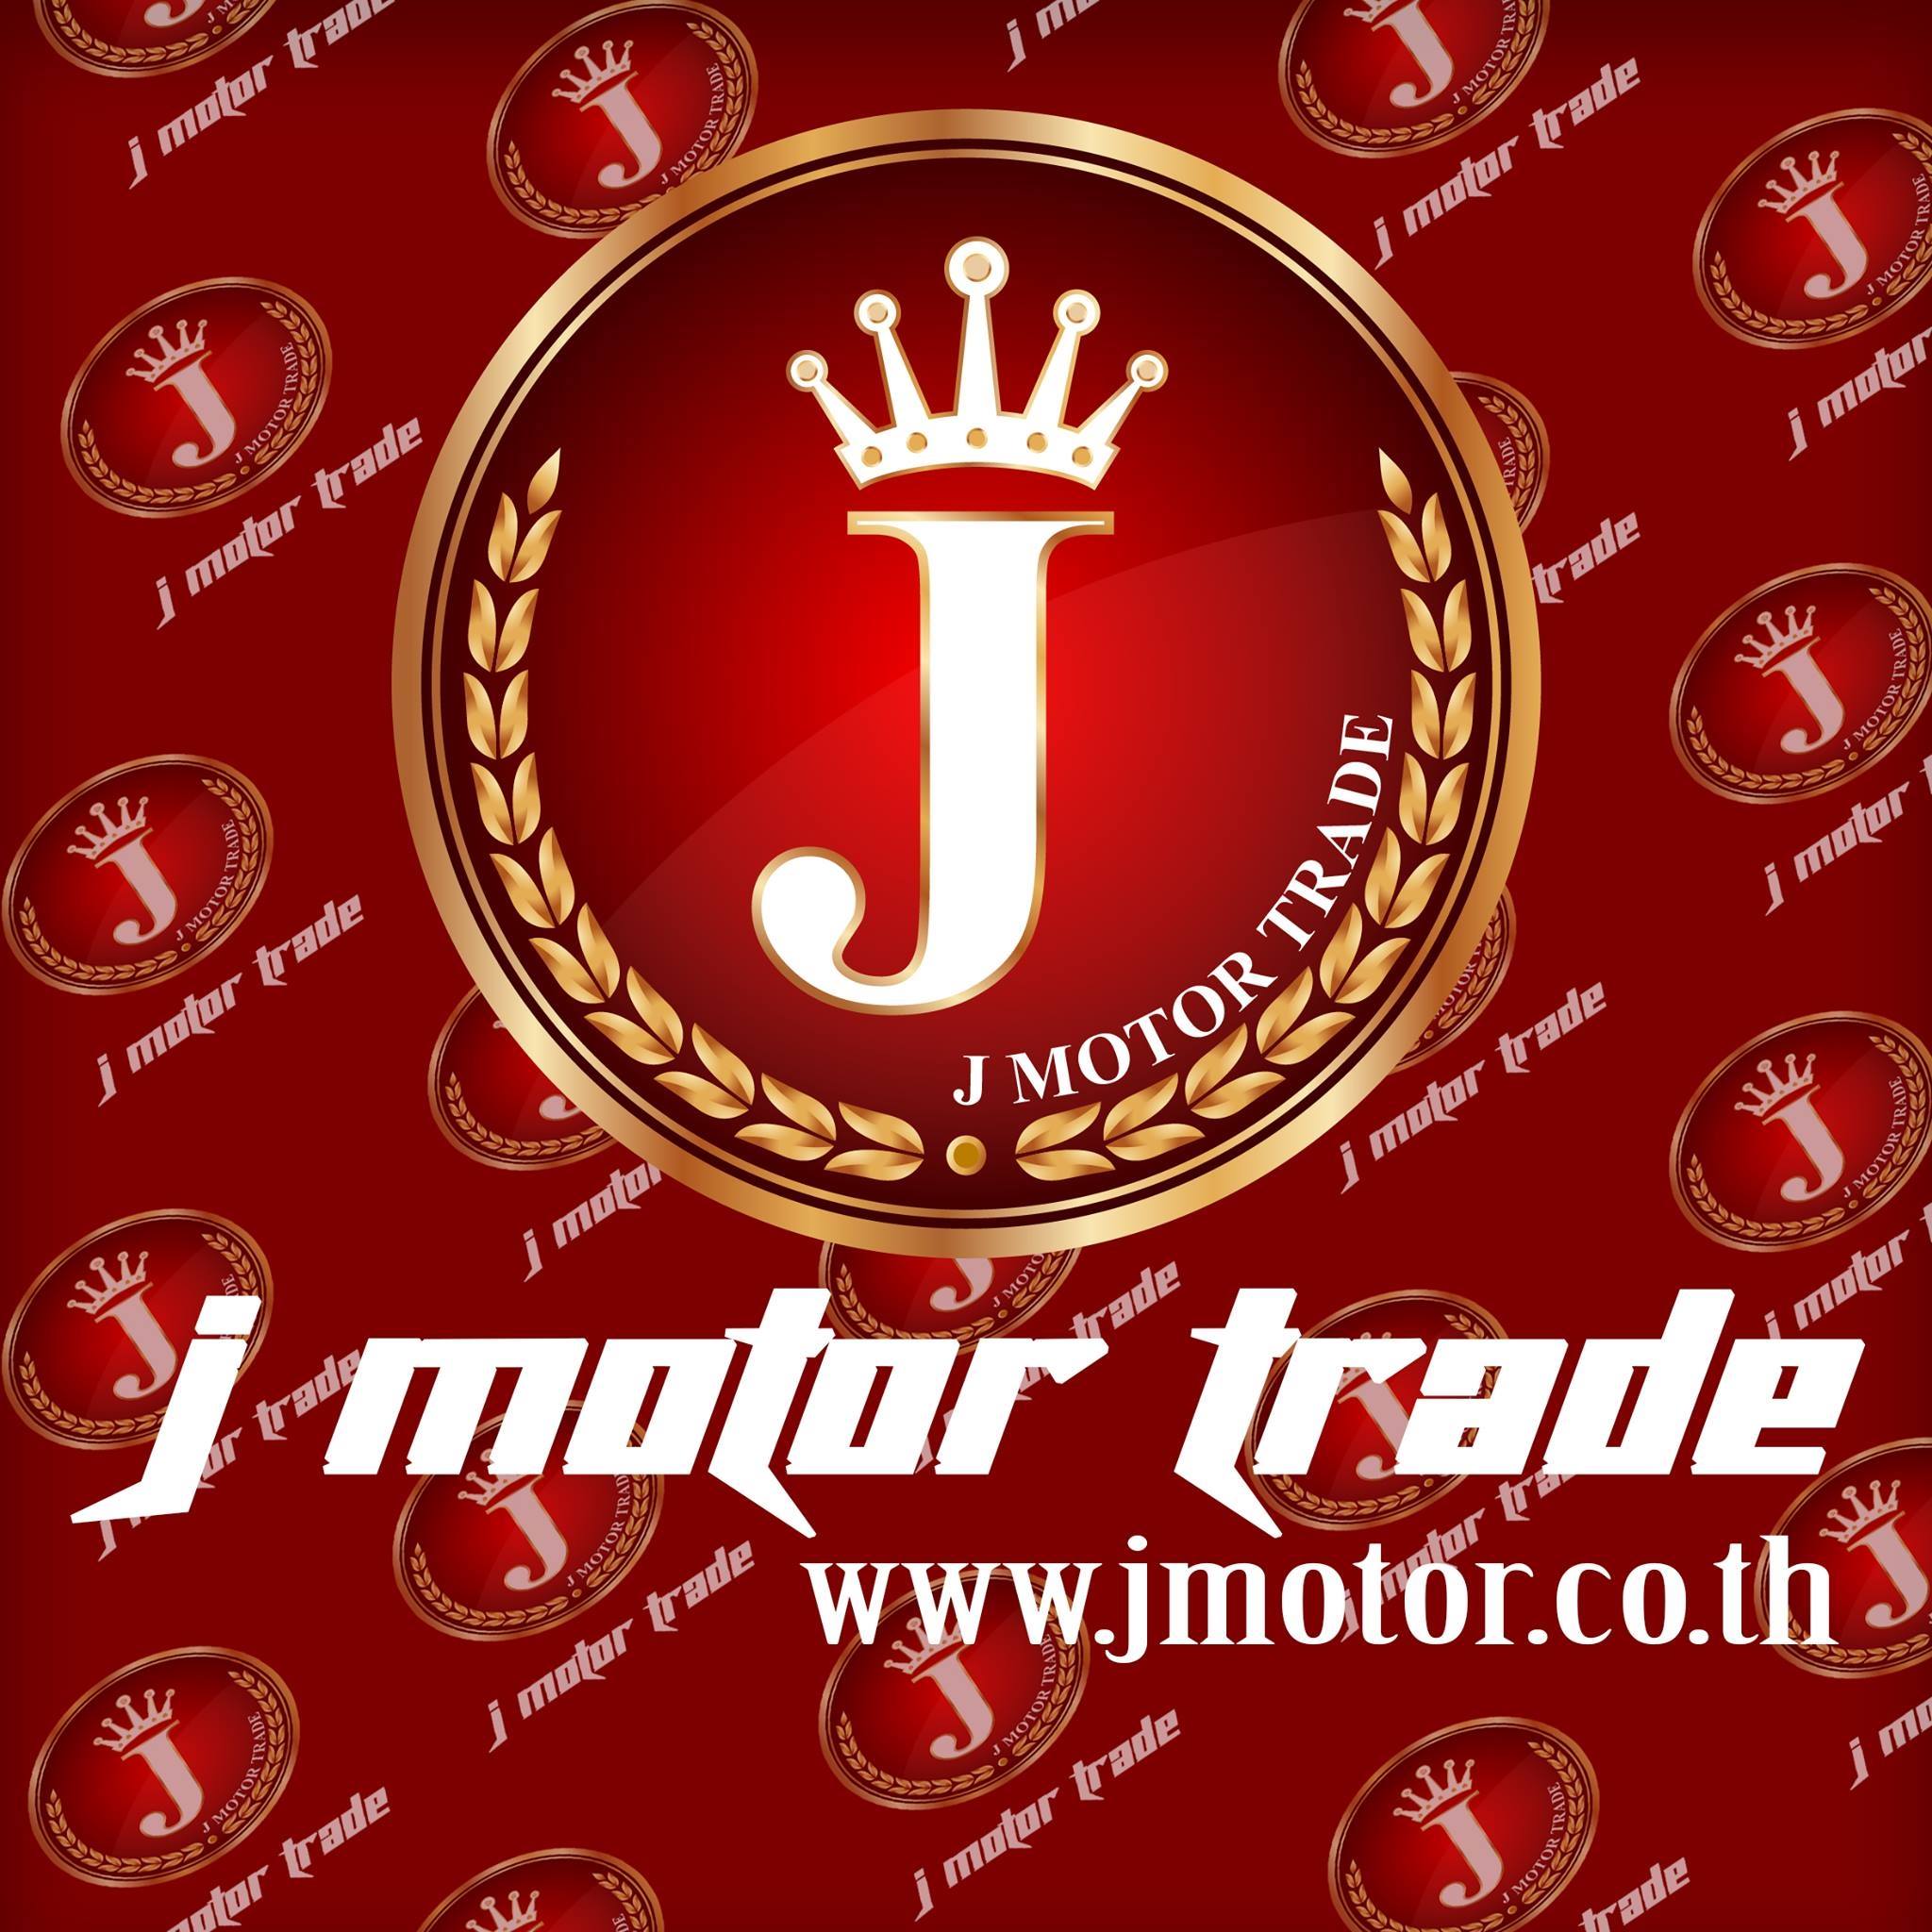 J Motor Trade Co.,Ltd.